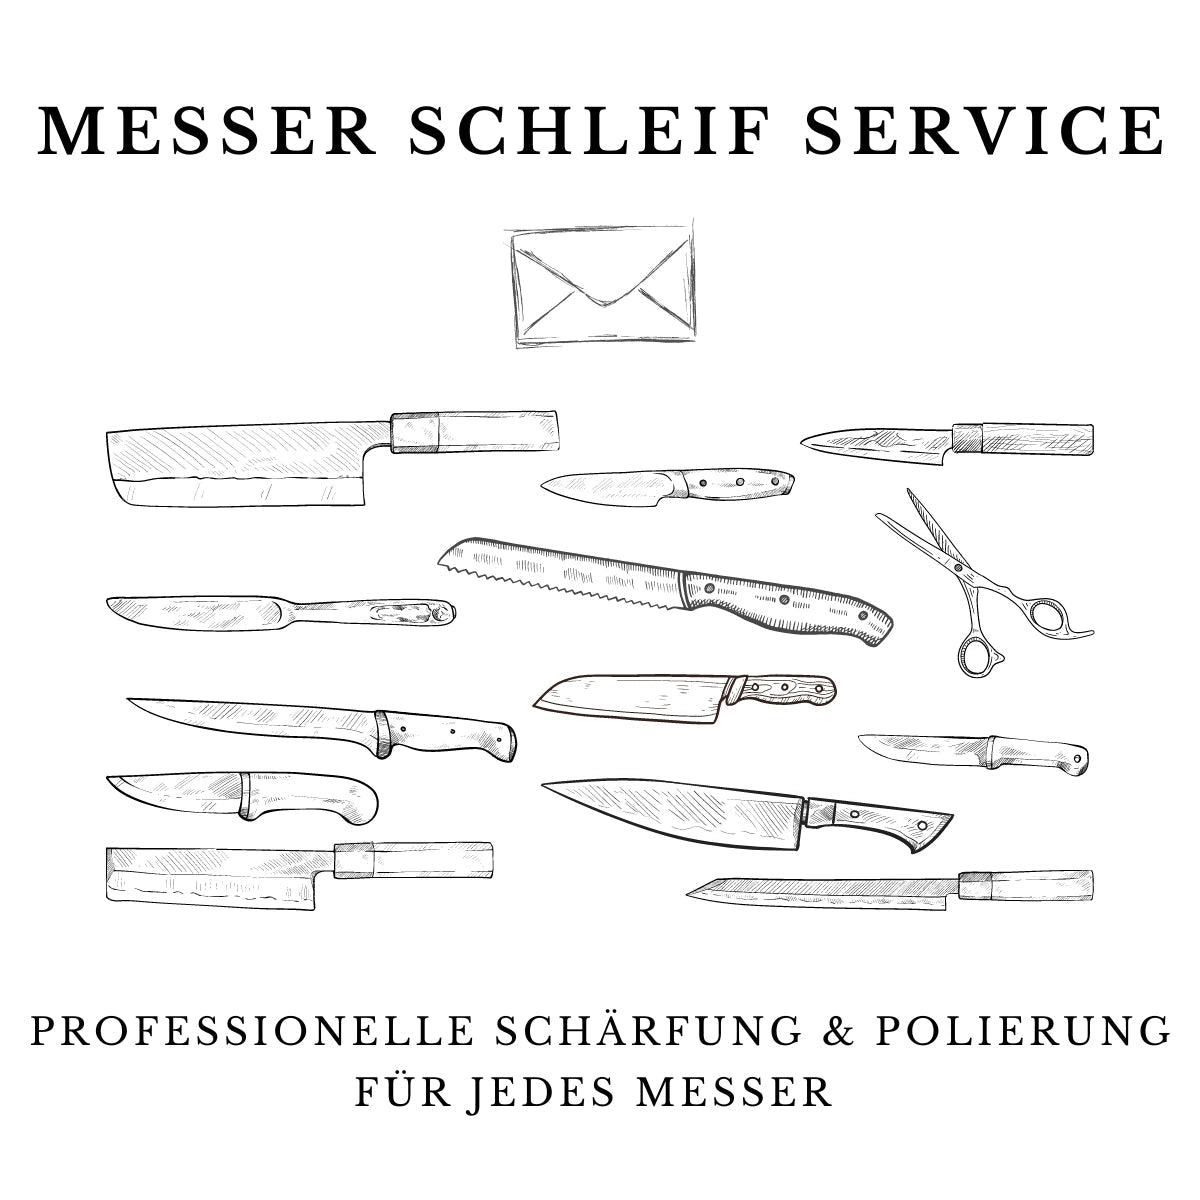 Messer Schleif Service | Profi Service | Messerschleiferei - BABOSSAMesser Schleif Service | Profi Service | MesserschleifereiSchleifserviceBABOSSABABOSSA